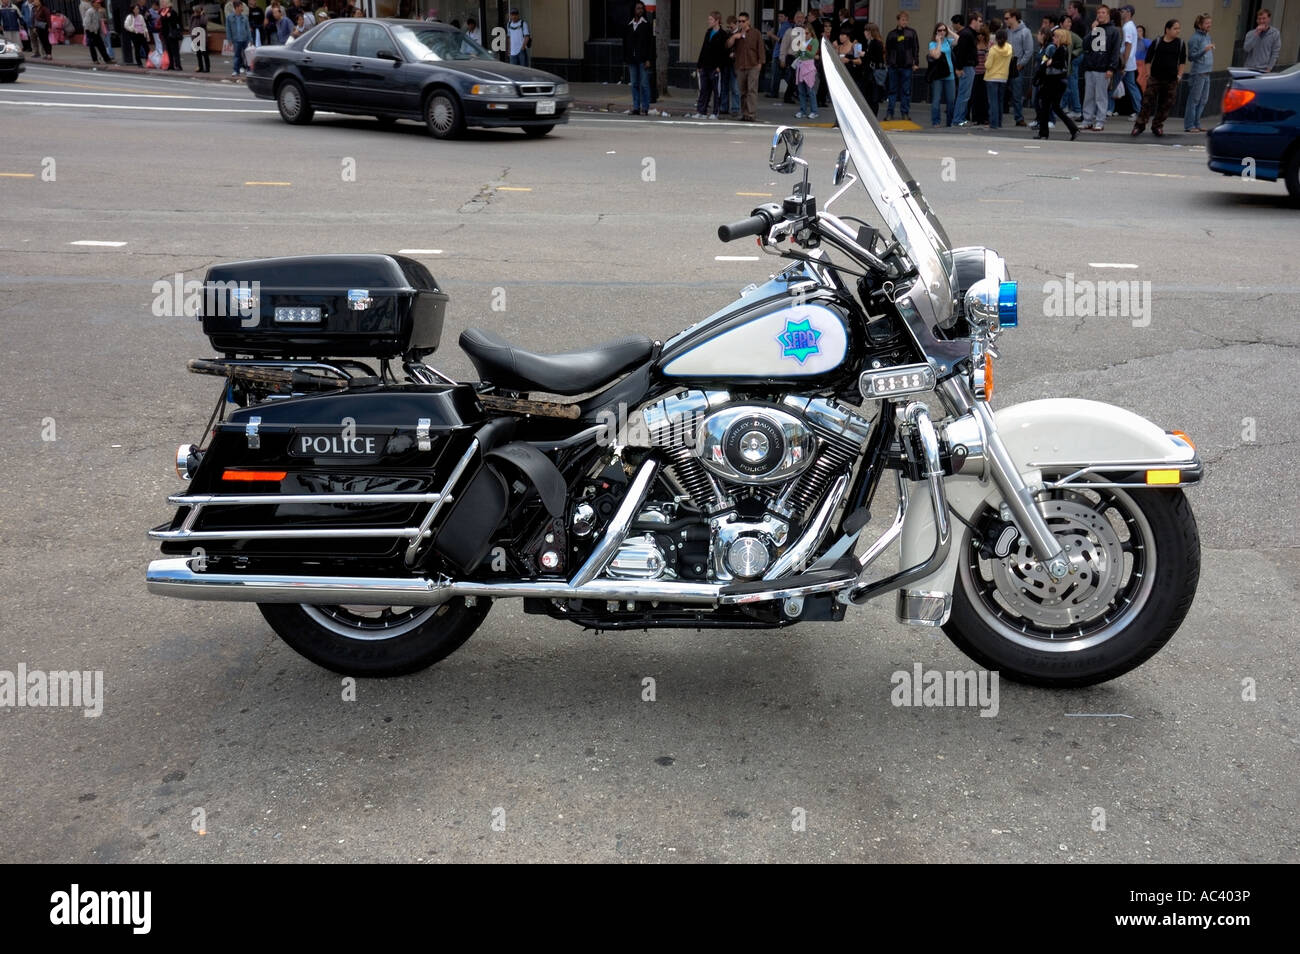 Police Motorcycle Harley Davidson Stock Photo - Alamy